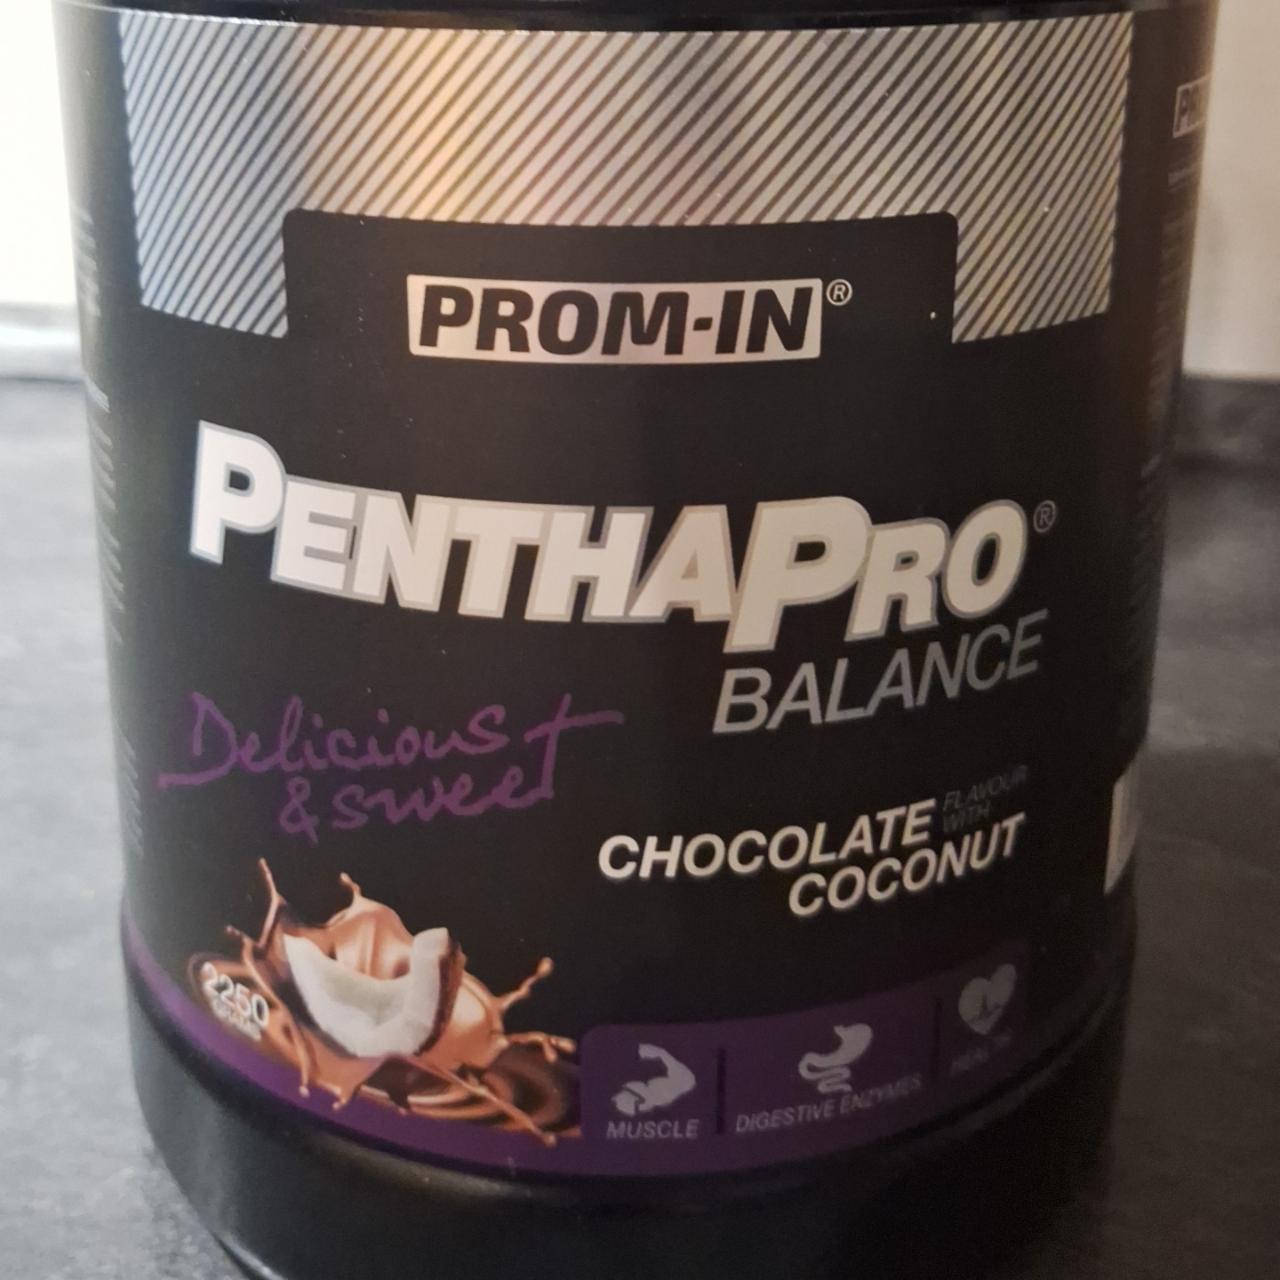 Fotografie - Pentha Pro Balance chocolate coconut Prom-in